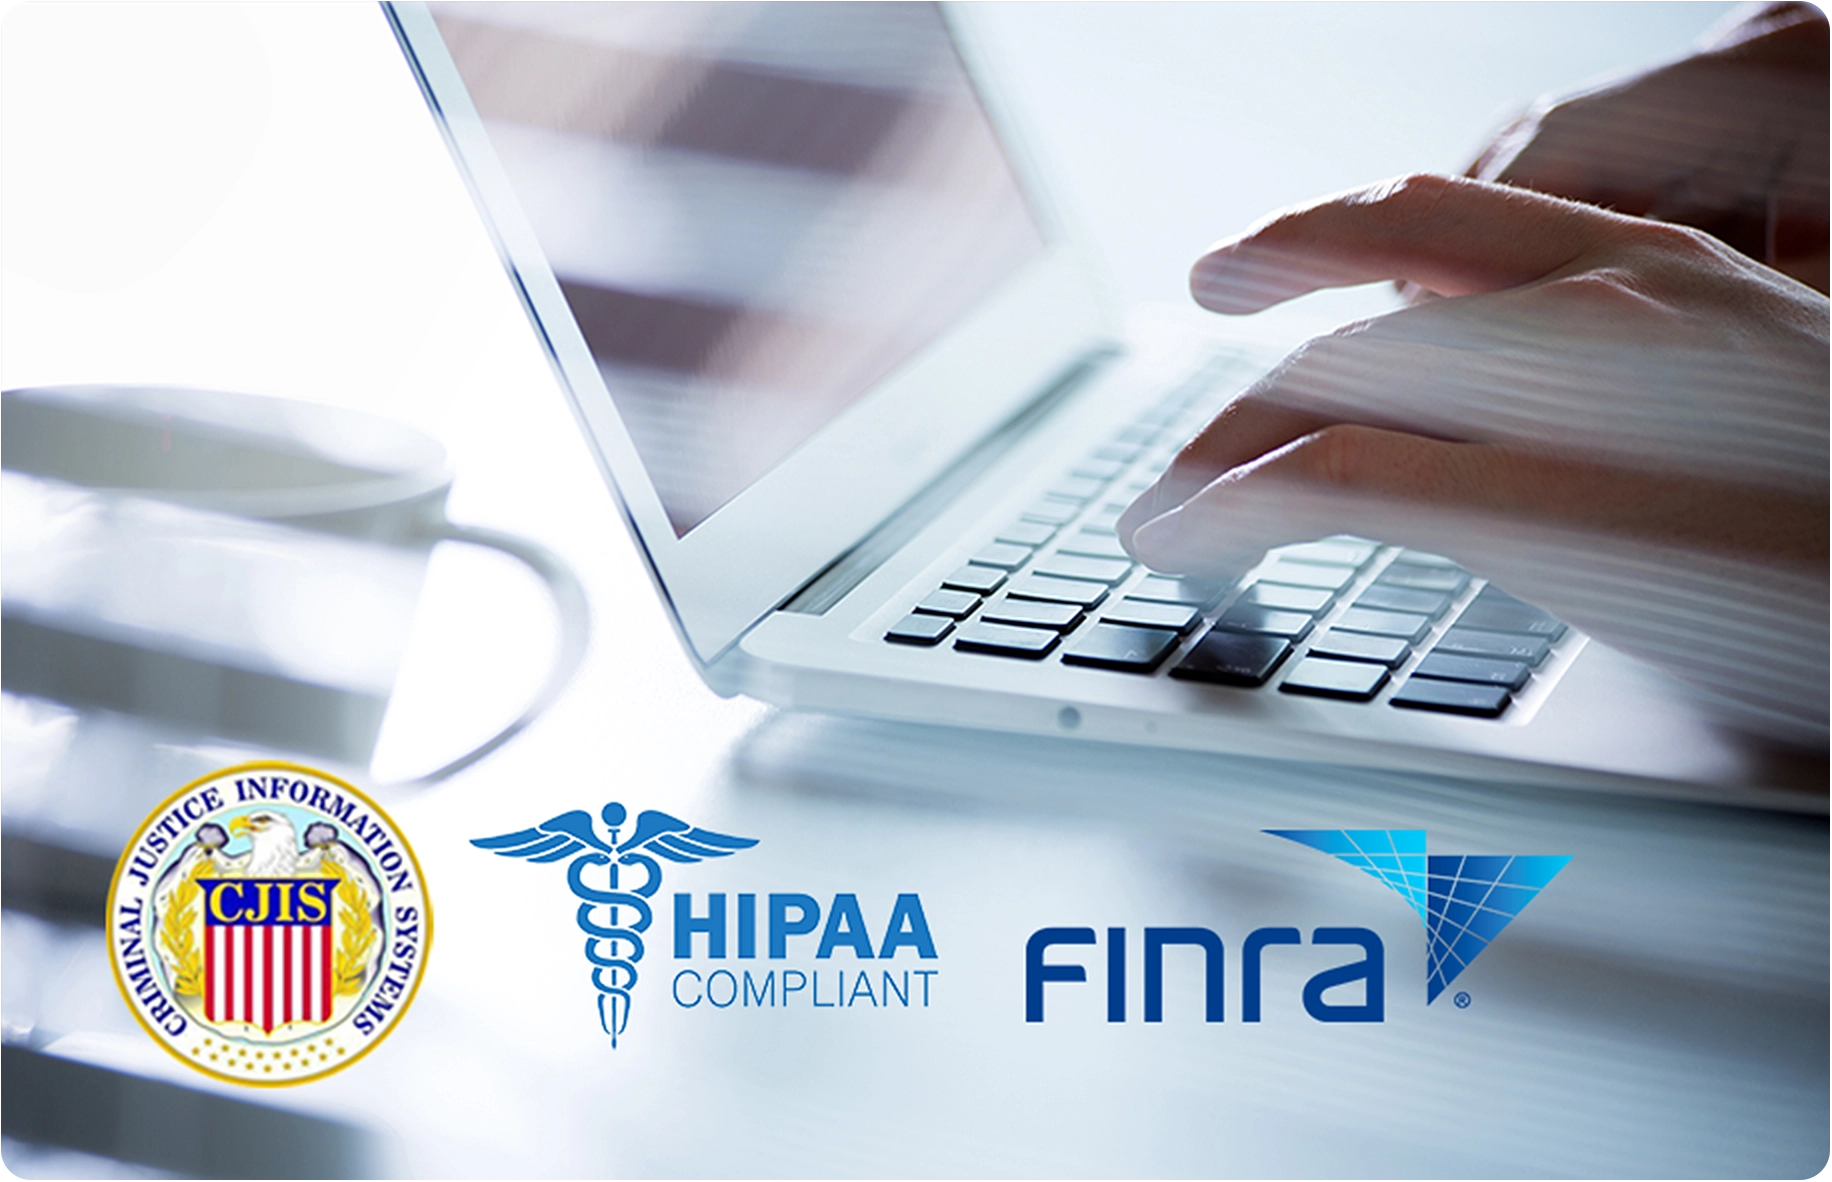 Image showing HIPAA, finra and CJIS compliance logos